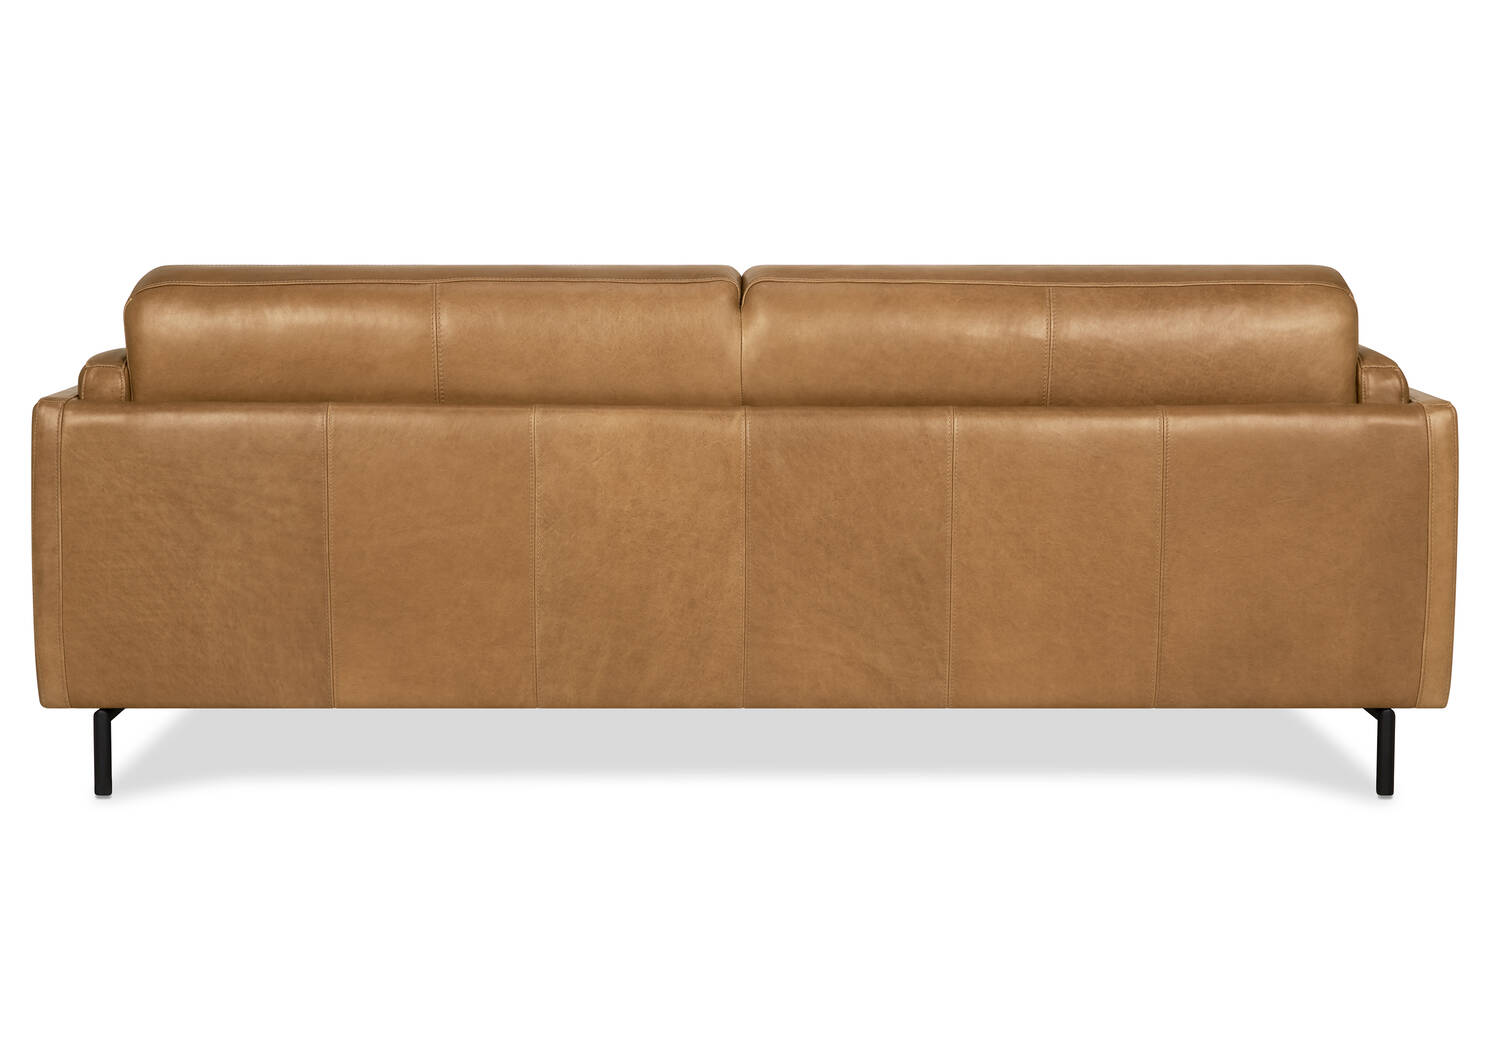 Renfrew Leather Sofa 80" -Adler Tan